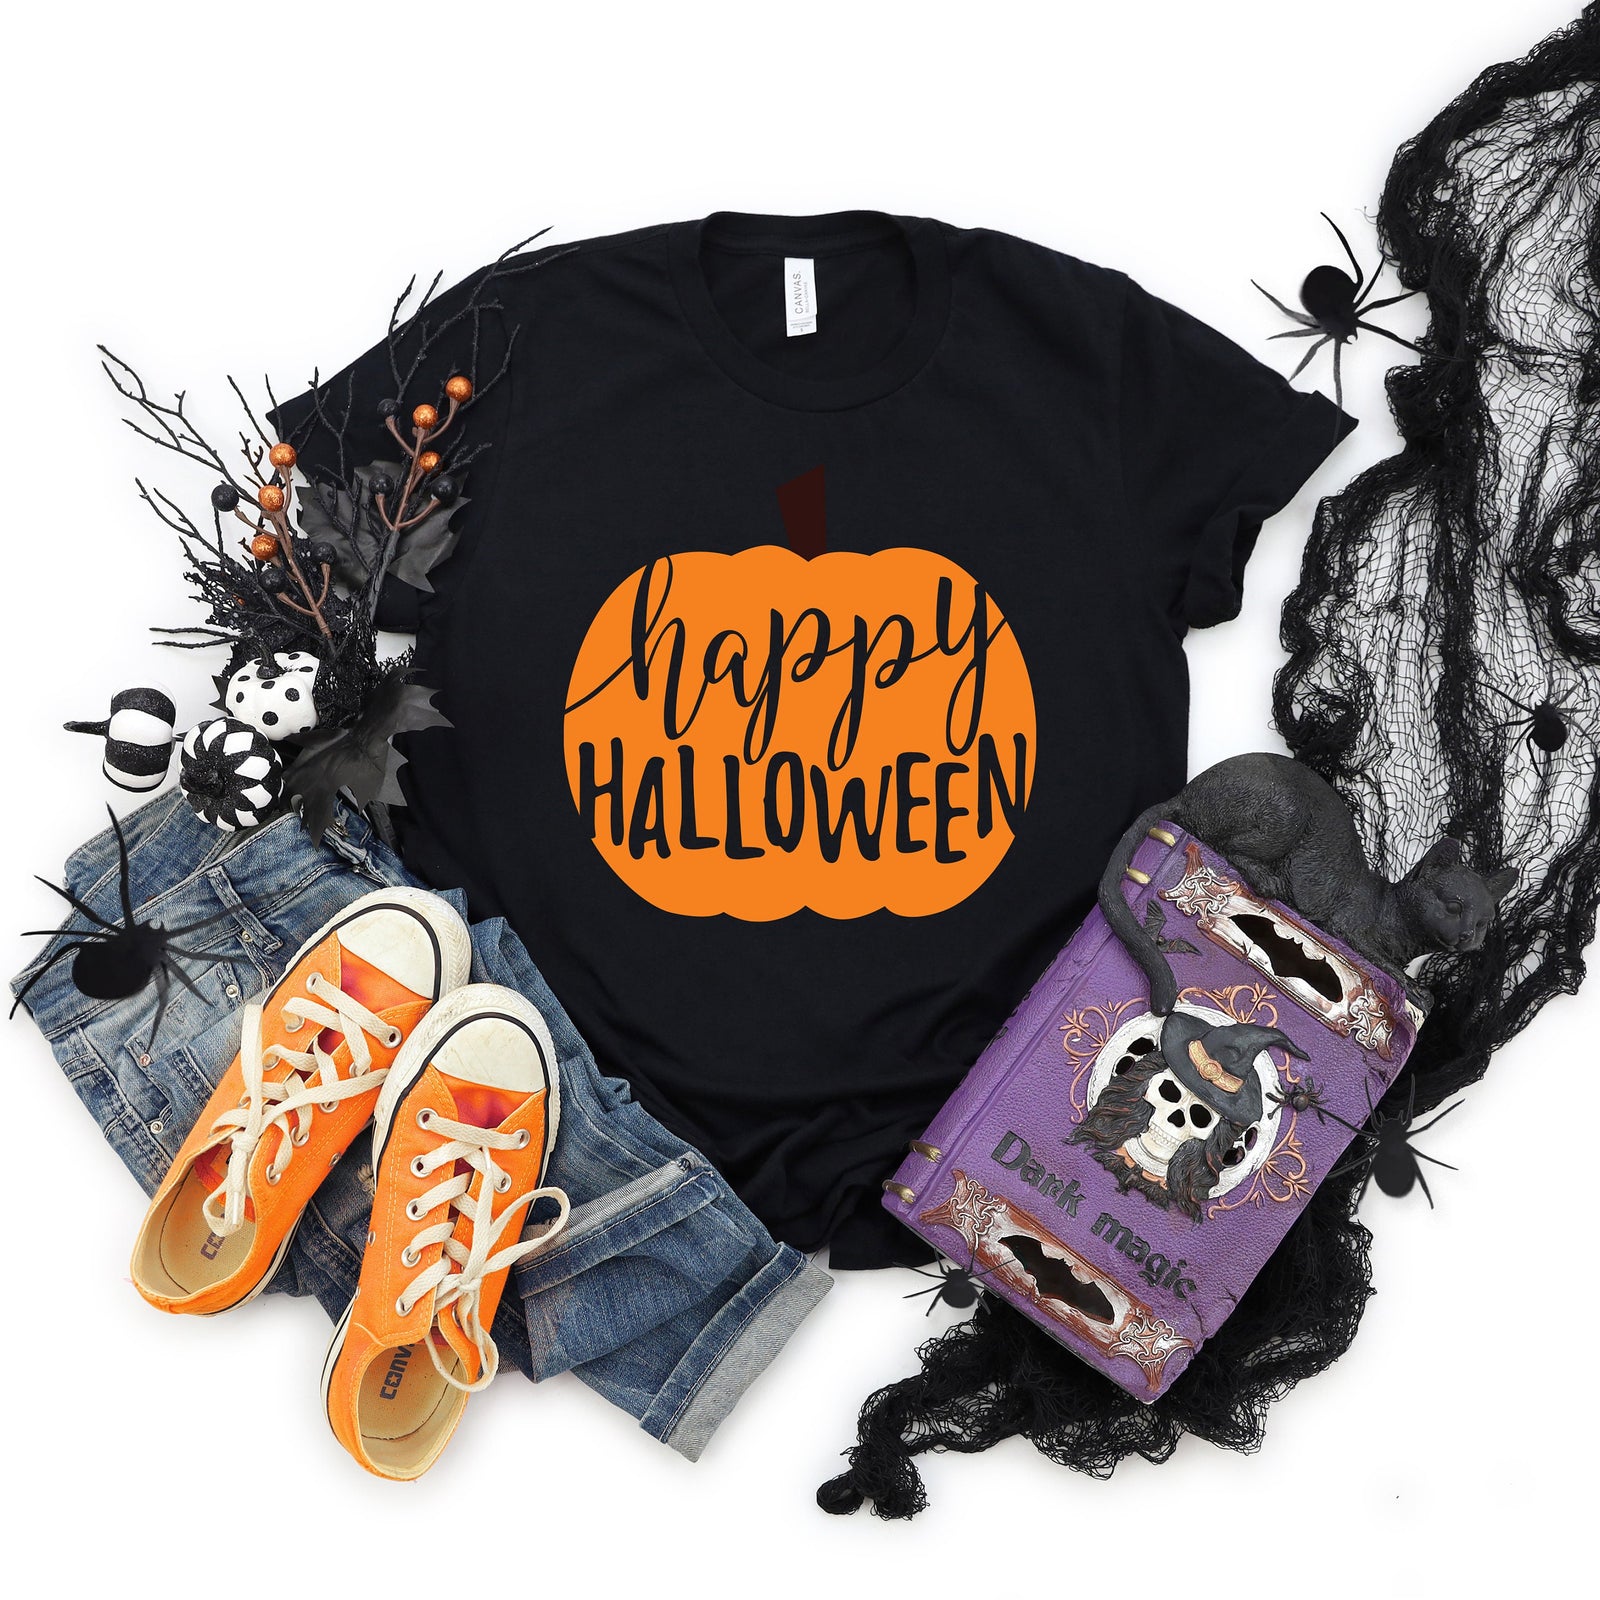 Happy Halloween Pumpkin Adult T Shirt - Halloween - Office - School - Funny T Shirt